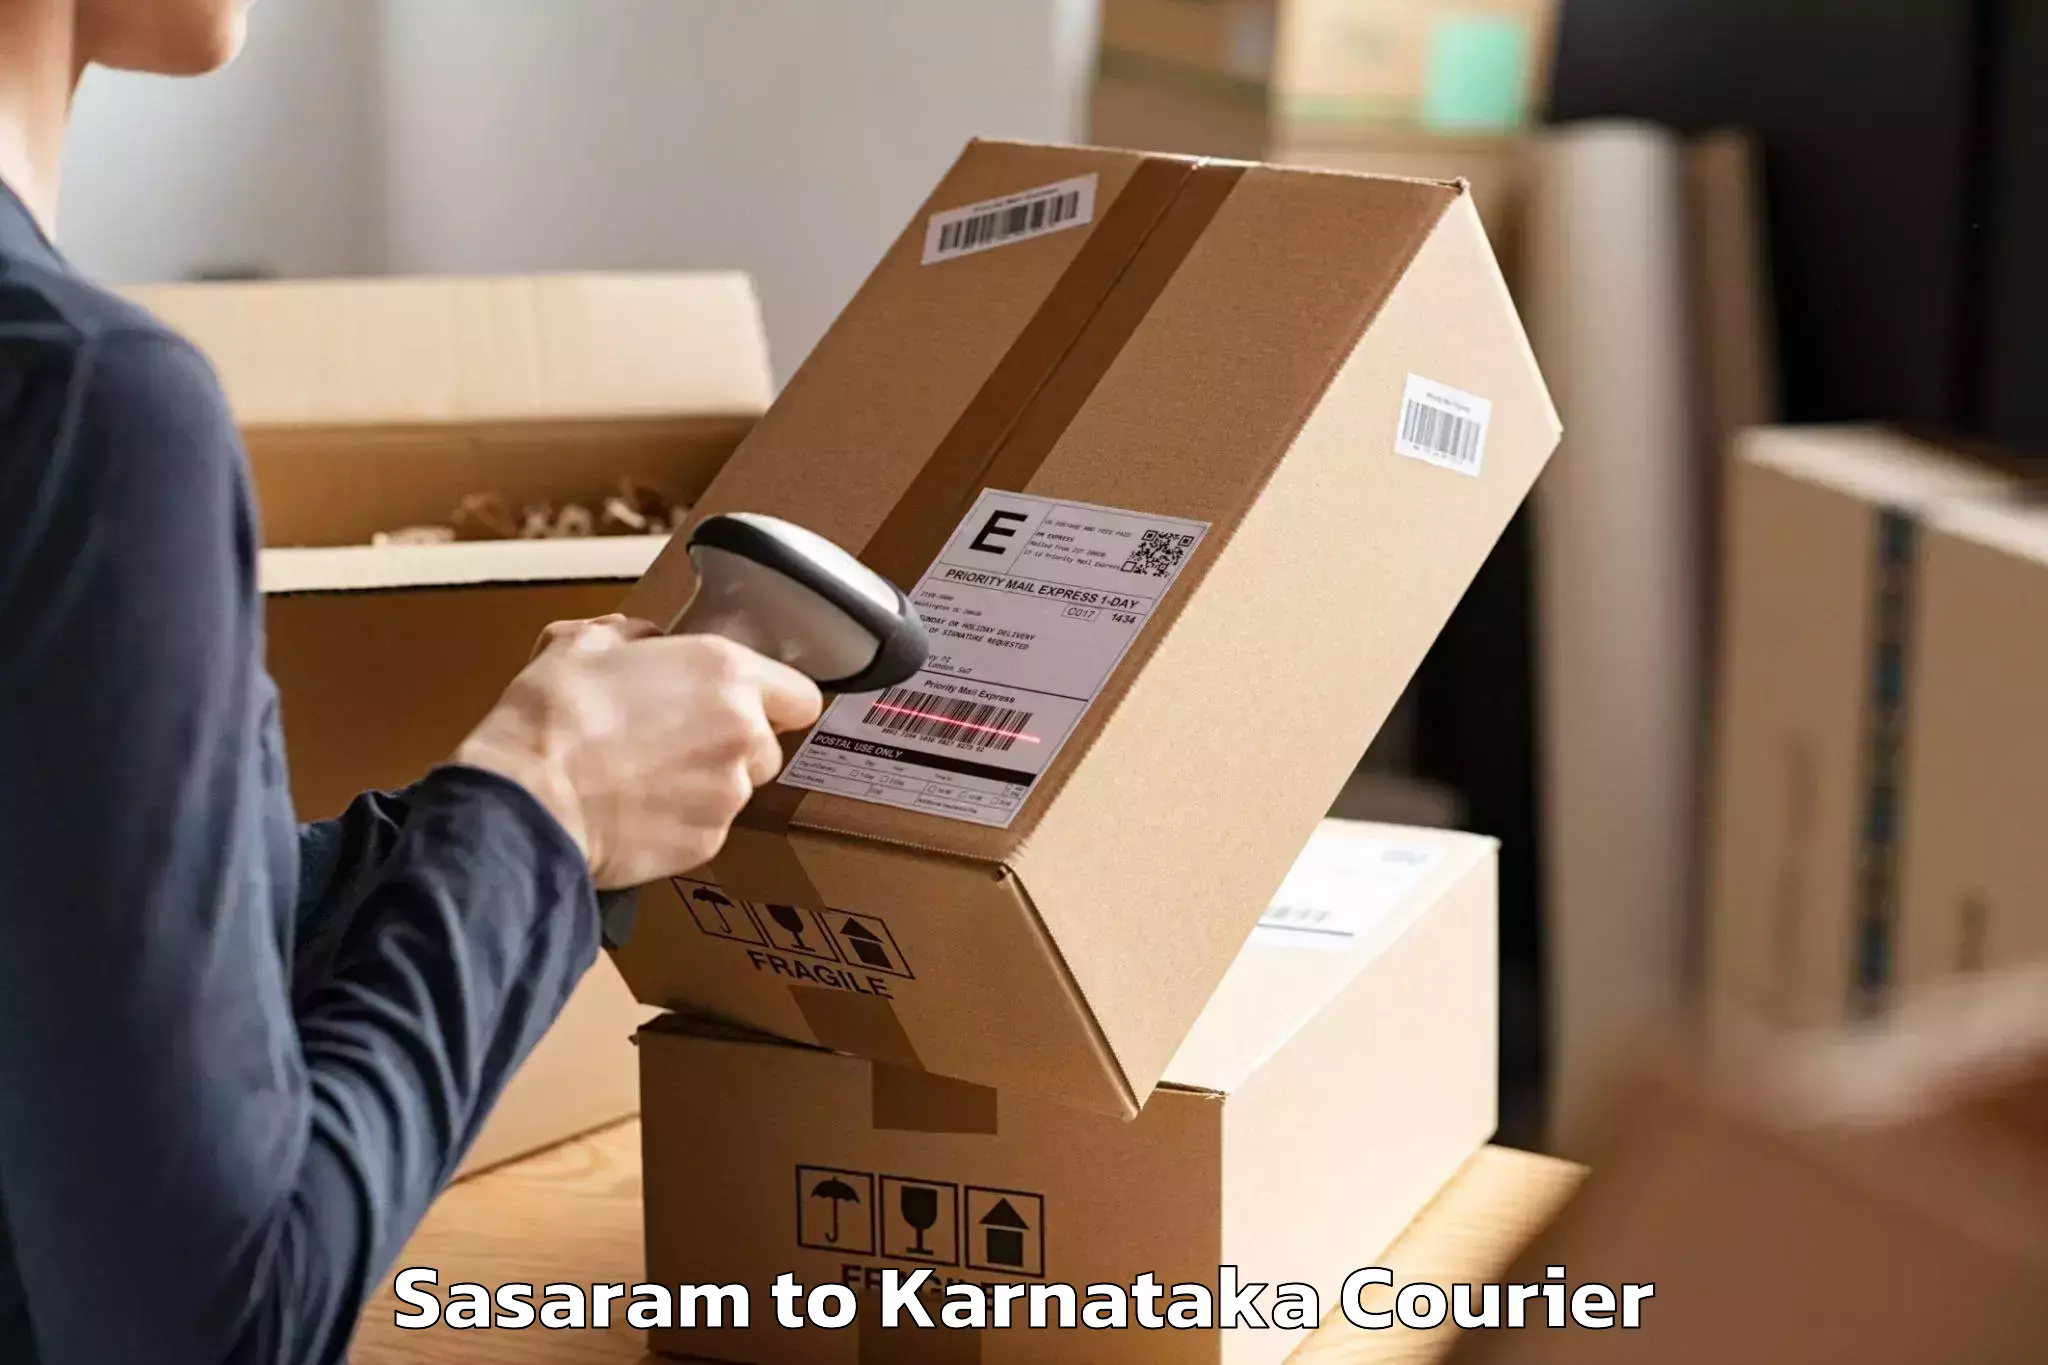 Efficient moving company Sasaram to Devanahalli